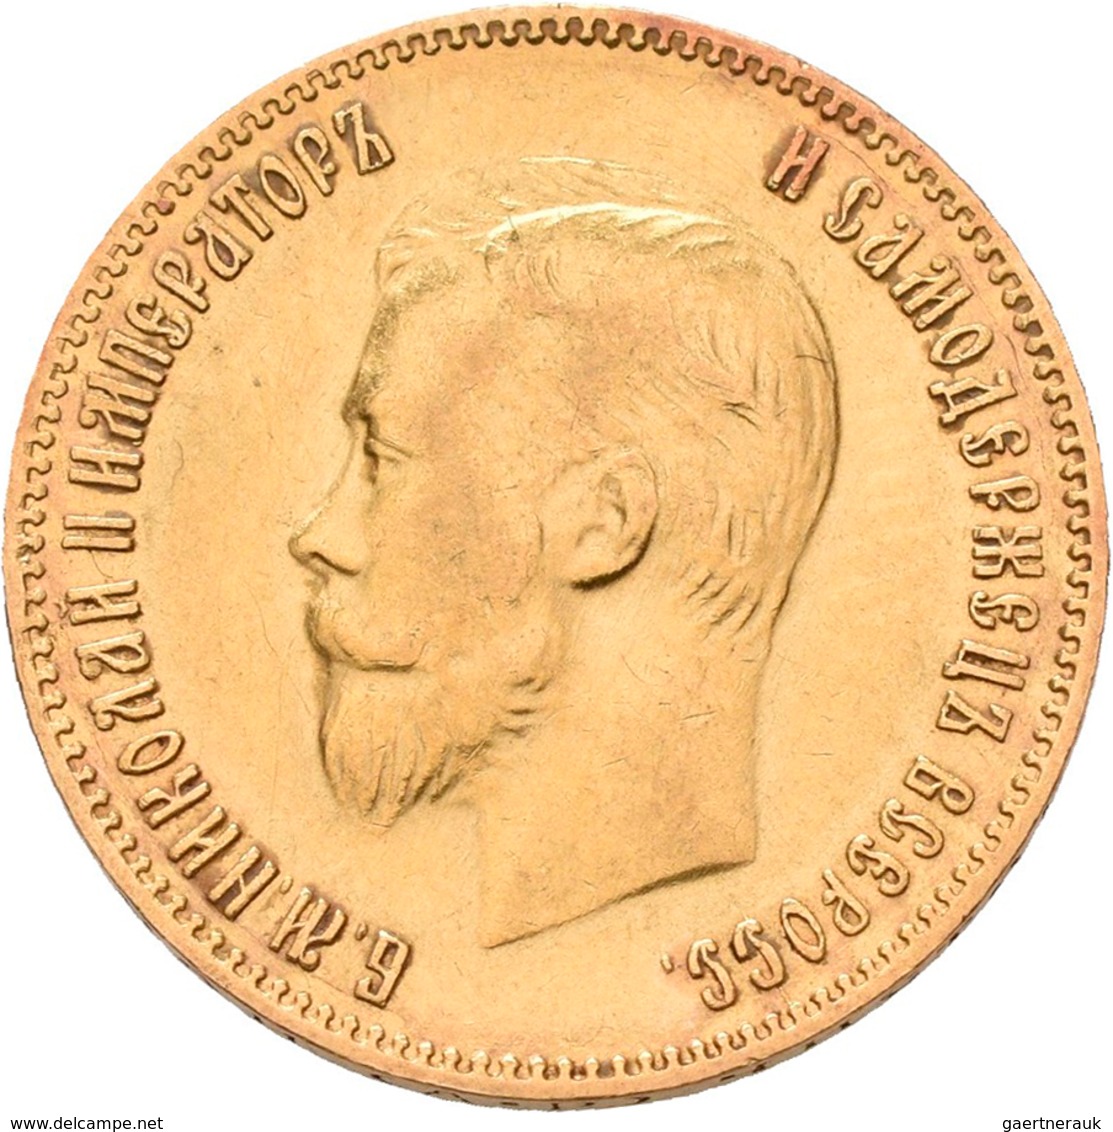 Russland - Anlagegold: Nikolaus II. 1894-1917: 10 Rubel 1903 (AR - Alexander Redko). KM Y# 64, Fried - Russia